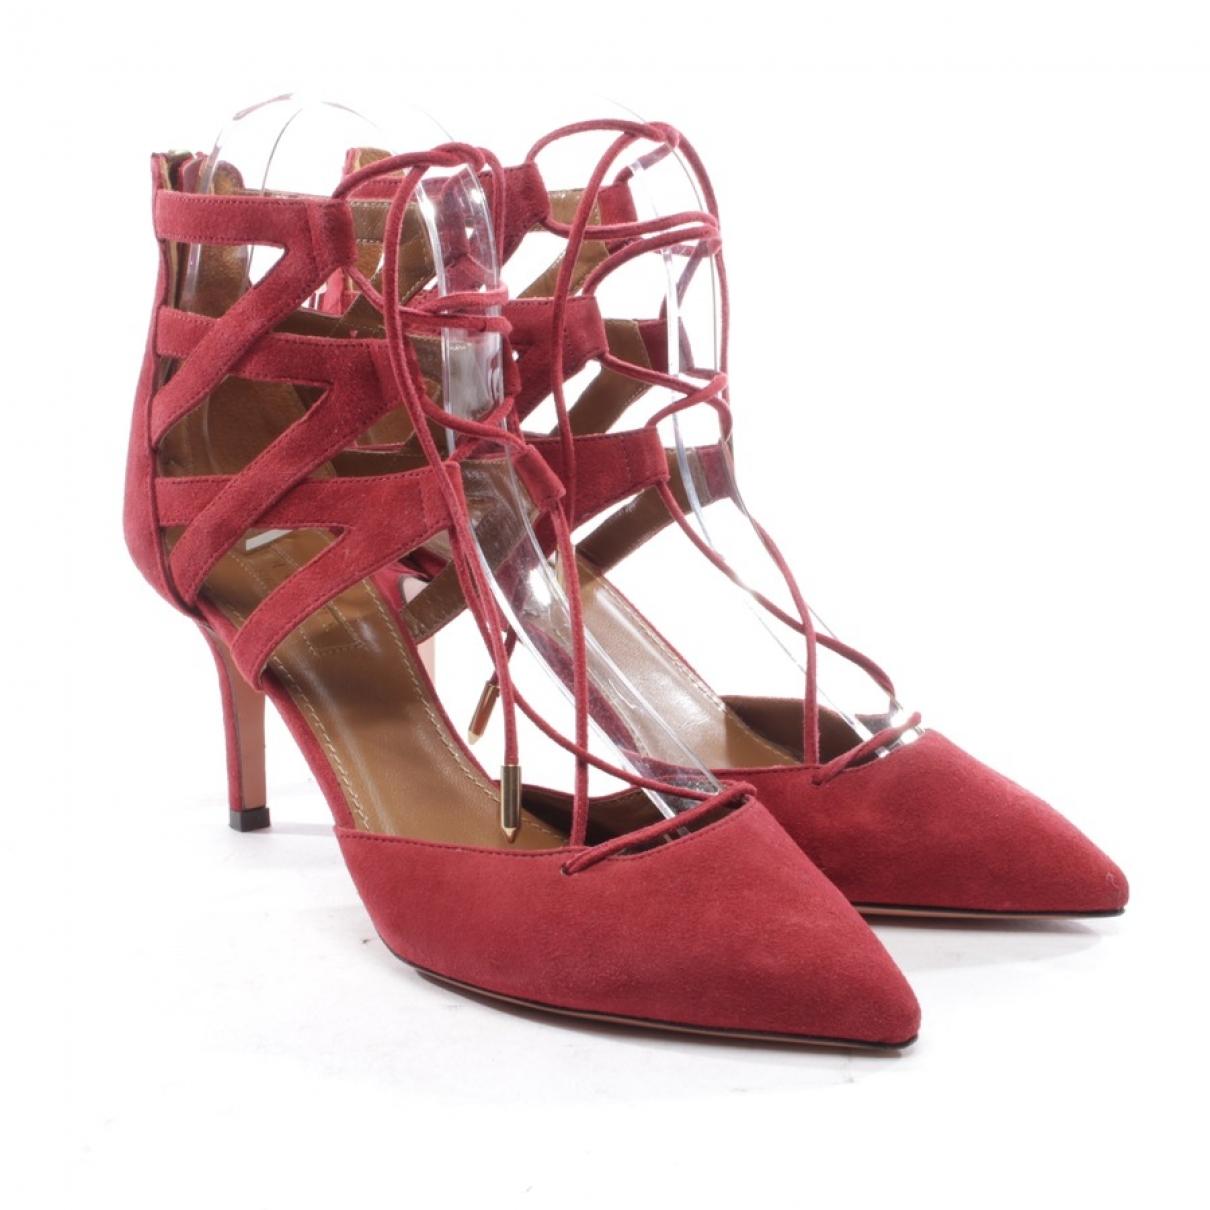 Aquazzura Belgravia Leather Heels in Red - Lyst